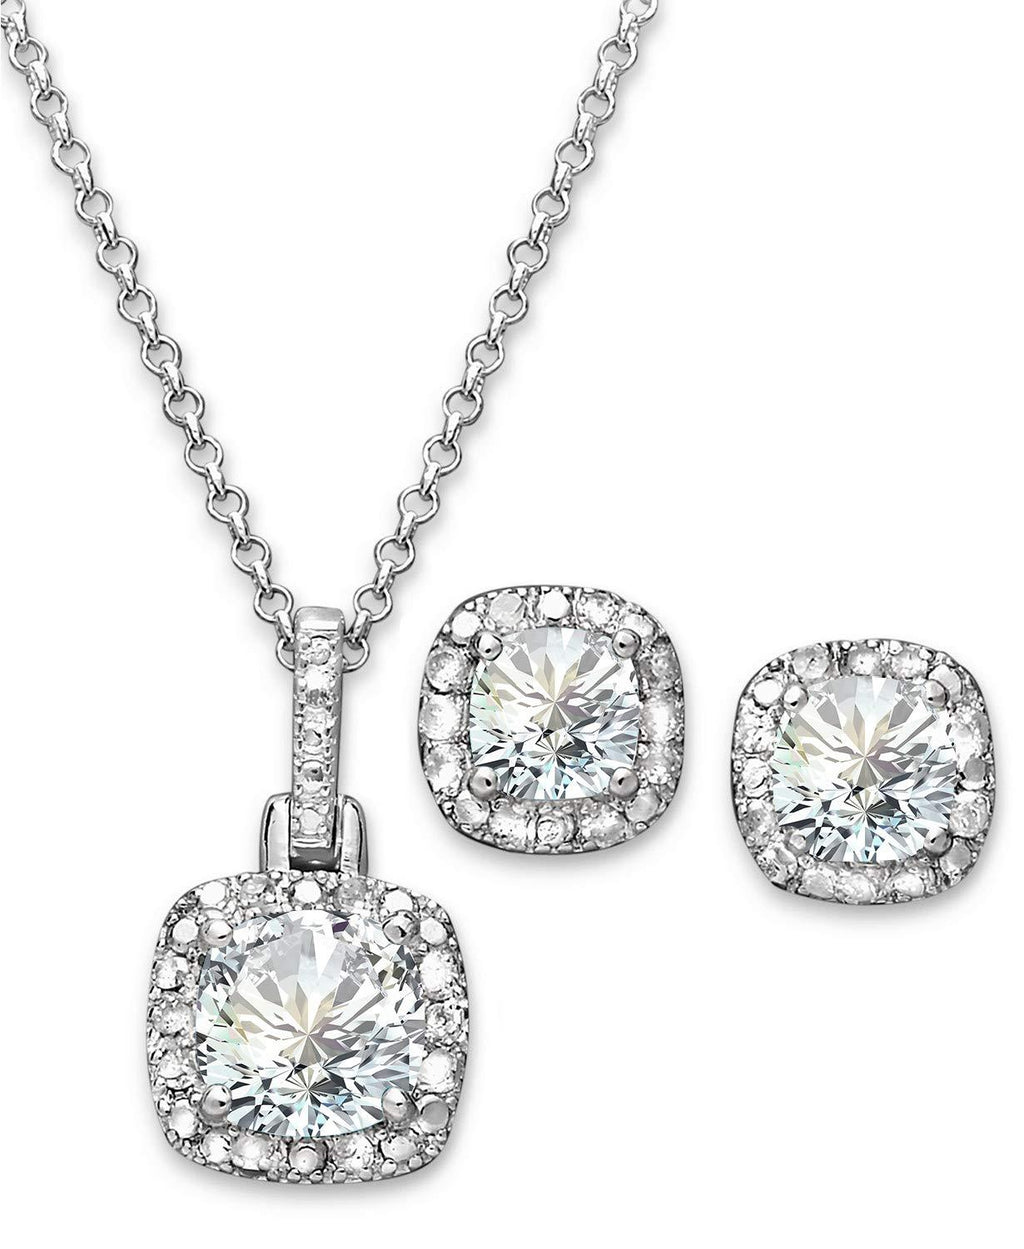 [Australia] - Jane Stone 925 Sterling Silver Necklace Earrings Jewelry Set Cubic Zirconia Wedding Accessories for Women Jewelry White 